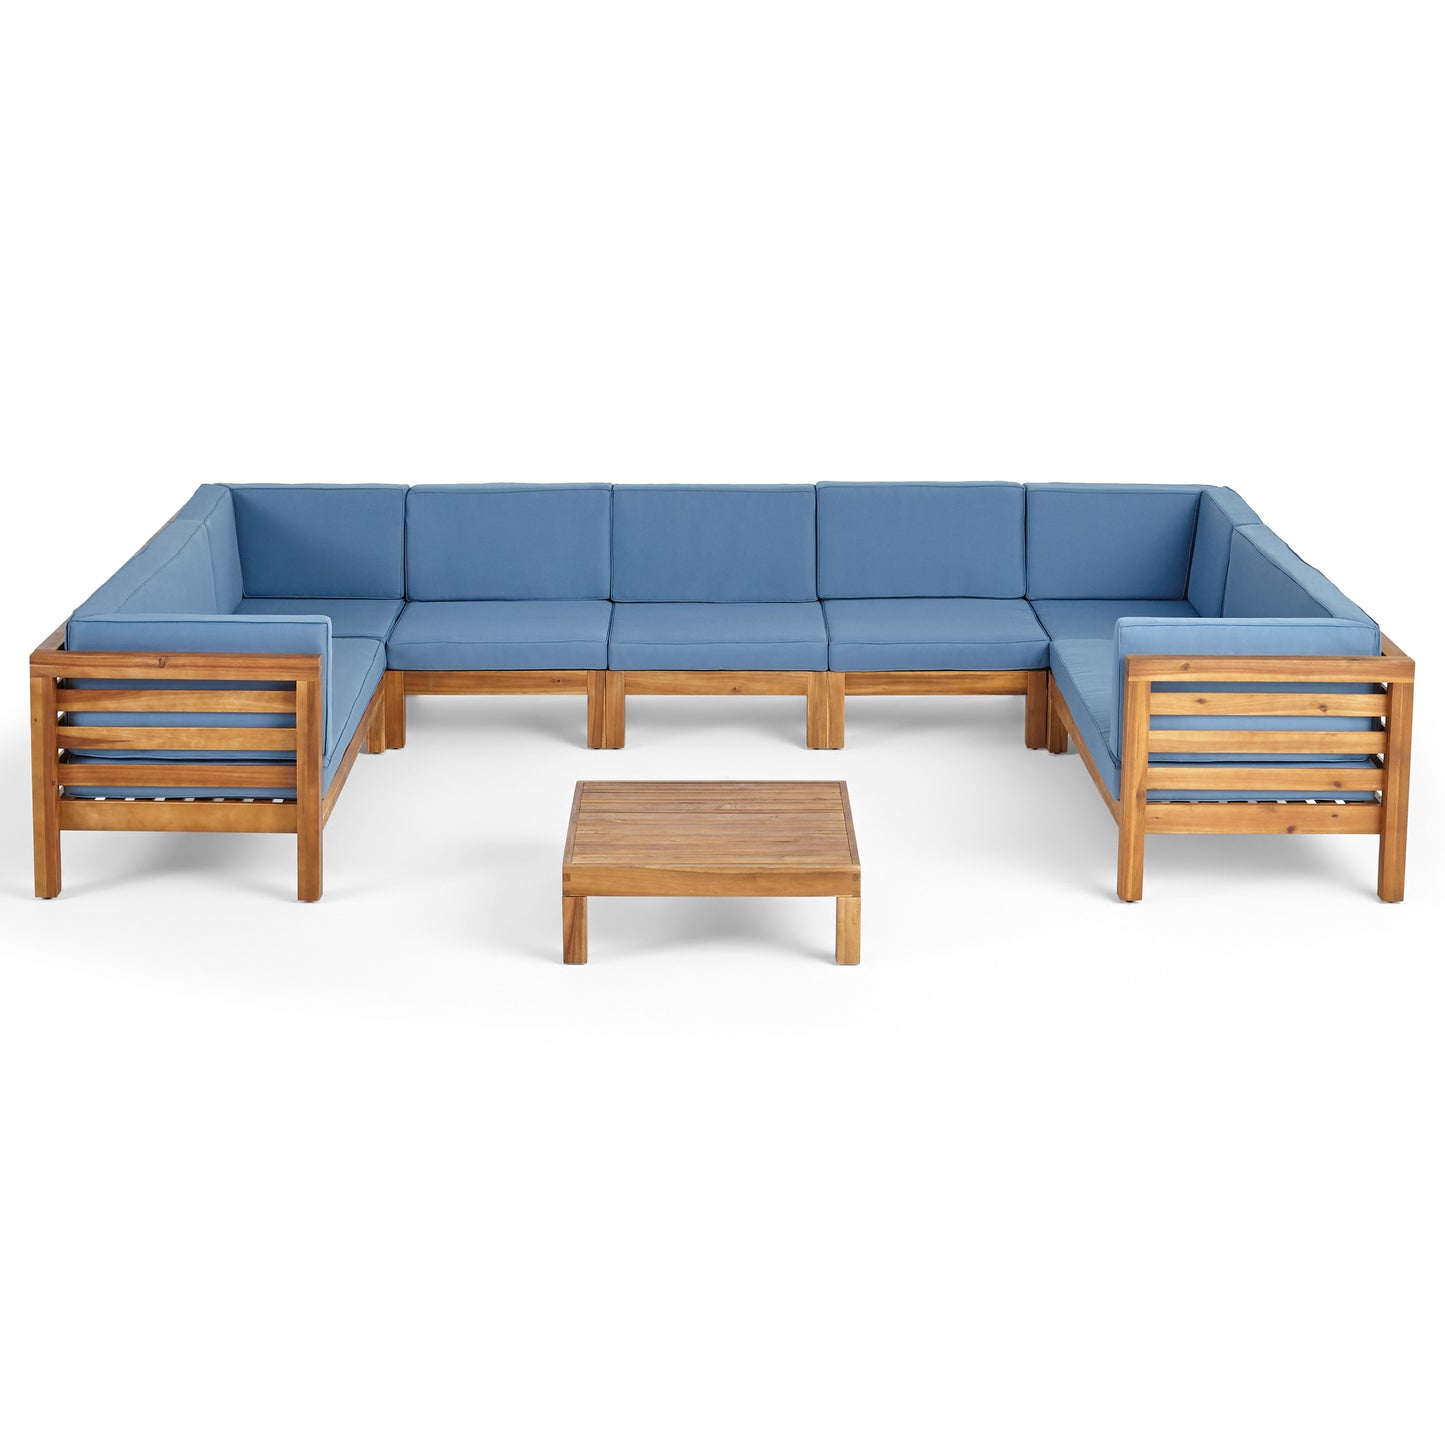 Emma Outdoor 9 Seater Acacia Wood Sectional Sofa Set